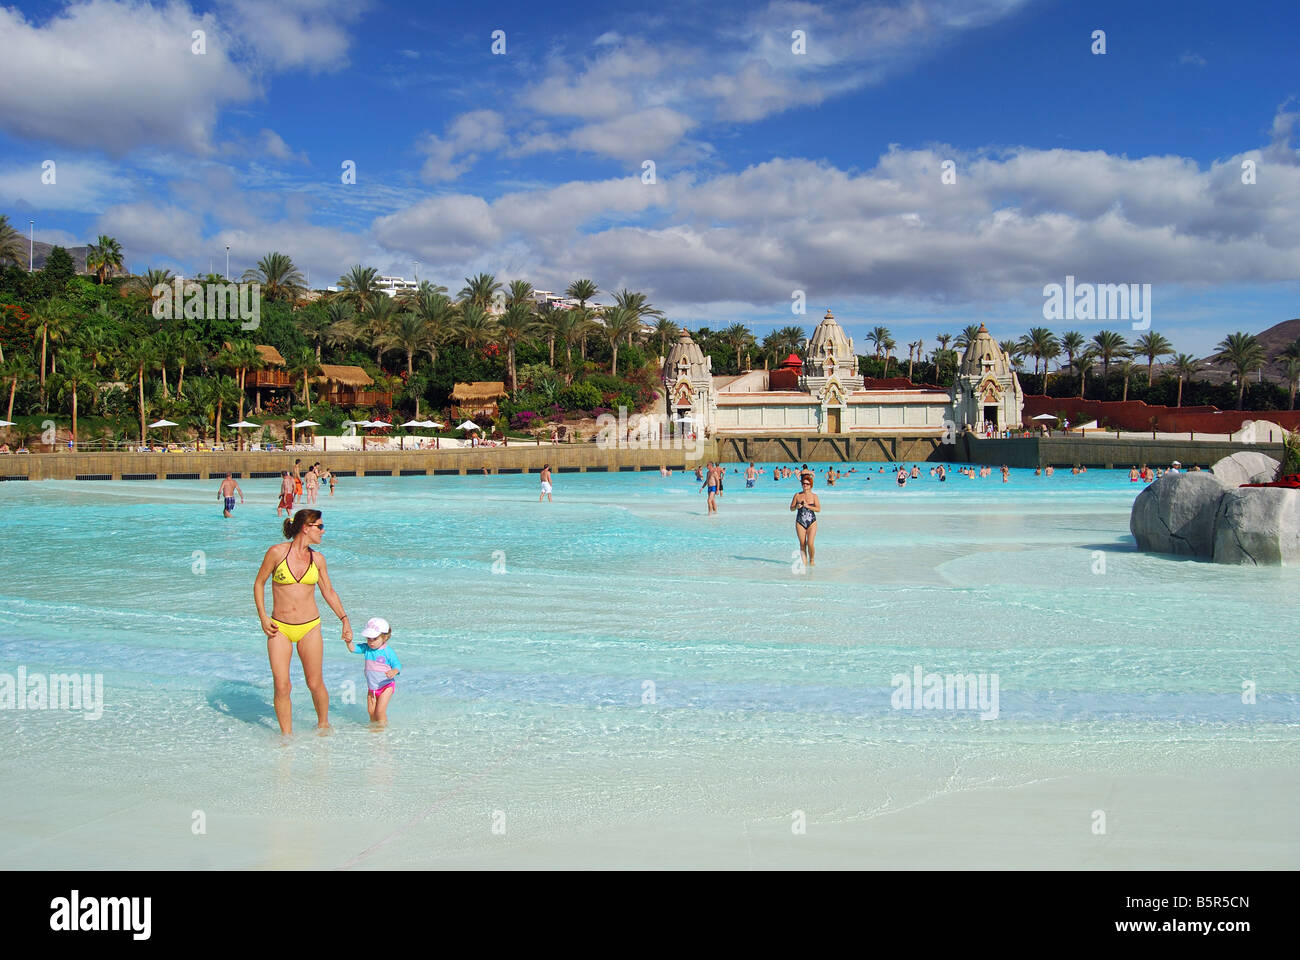 Wave Palace, Siam Park Water Kingdom Theme Park, Costa Adeje, Tenerife, Canary Islands, Spain Stock Photo